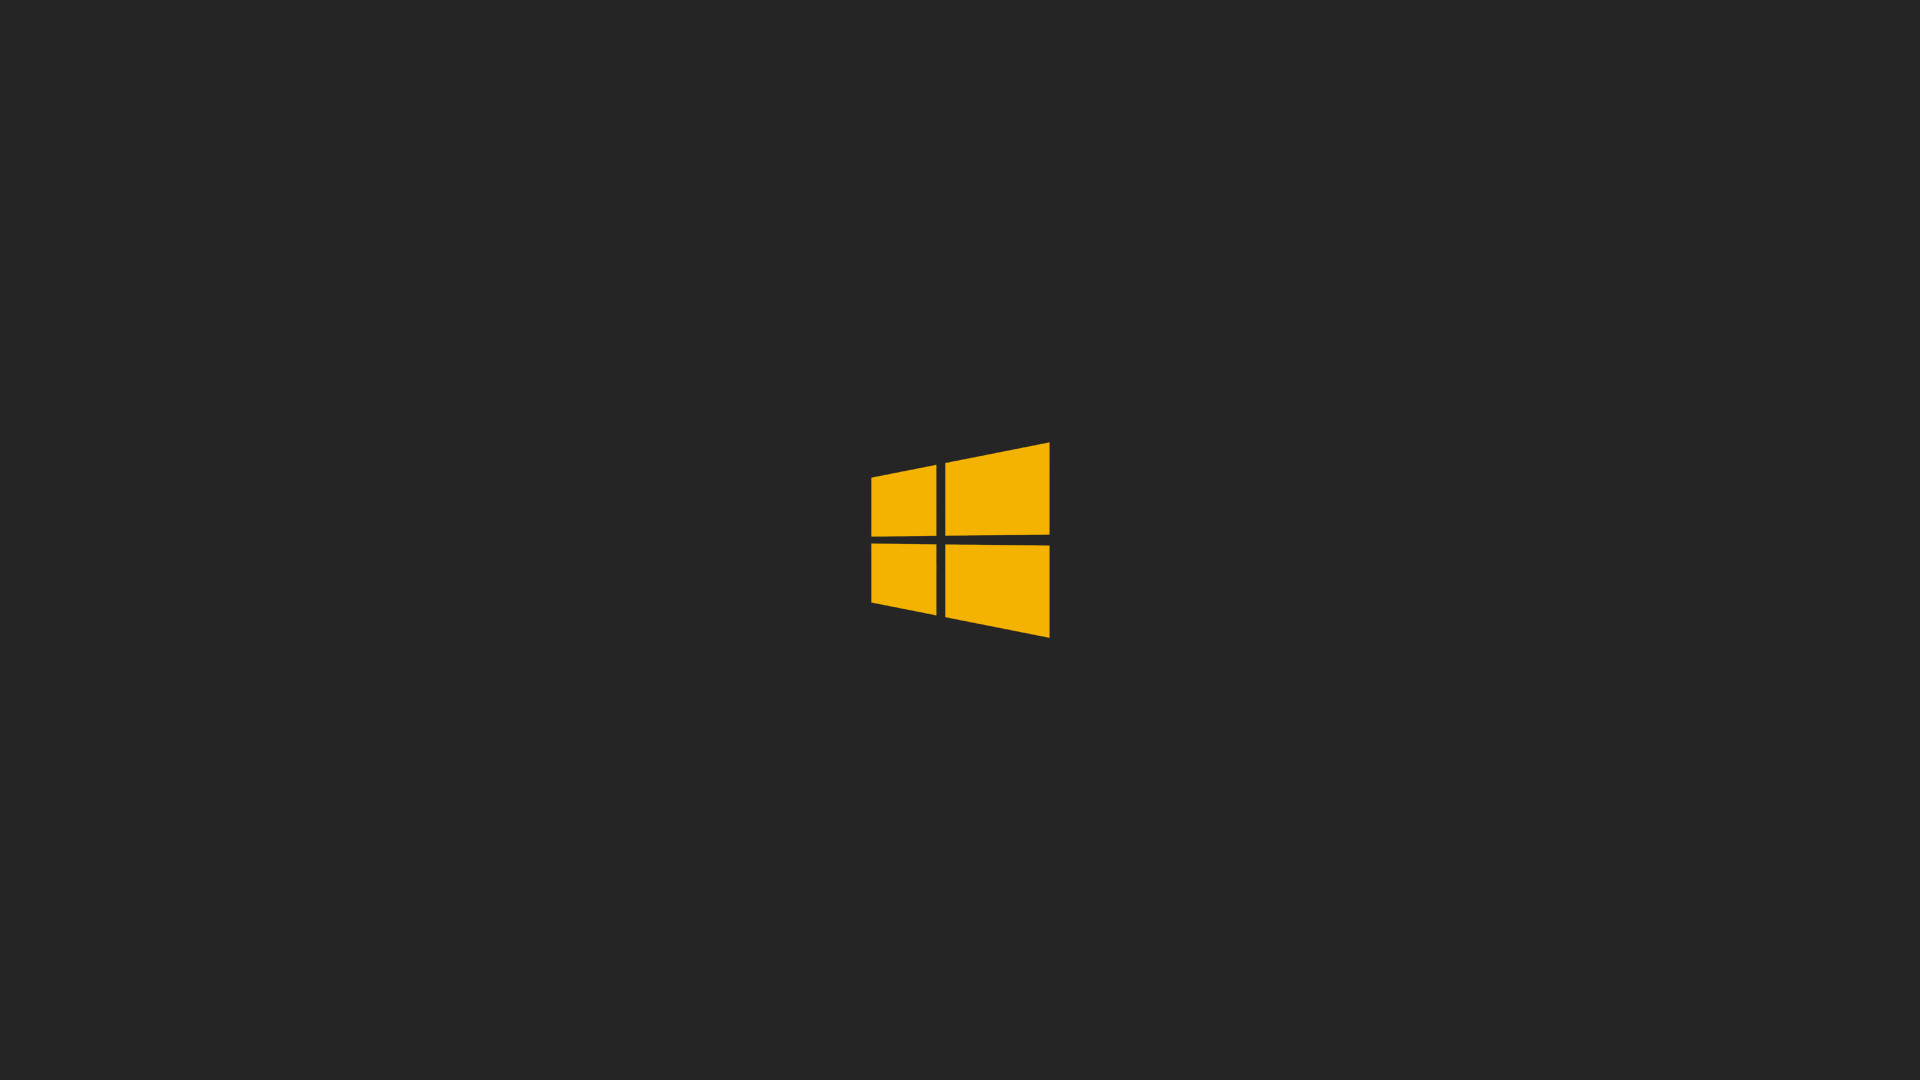 1920x1080 Windows 8 Yellow Logo And Black Background Des #11939 Wallpaper .